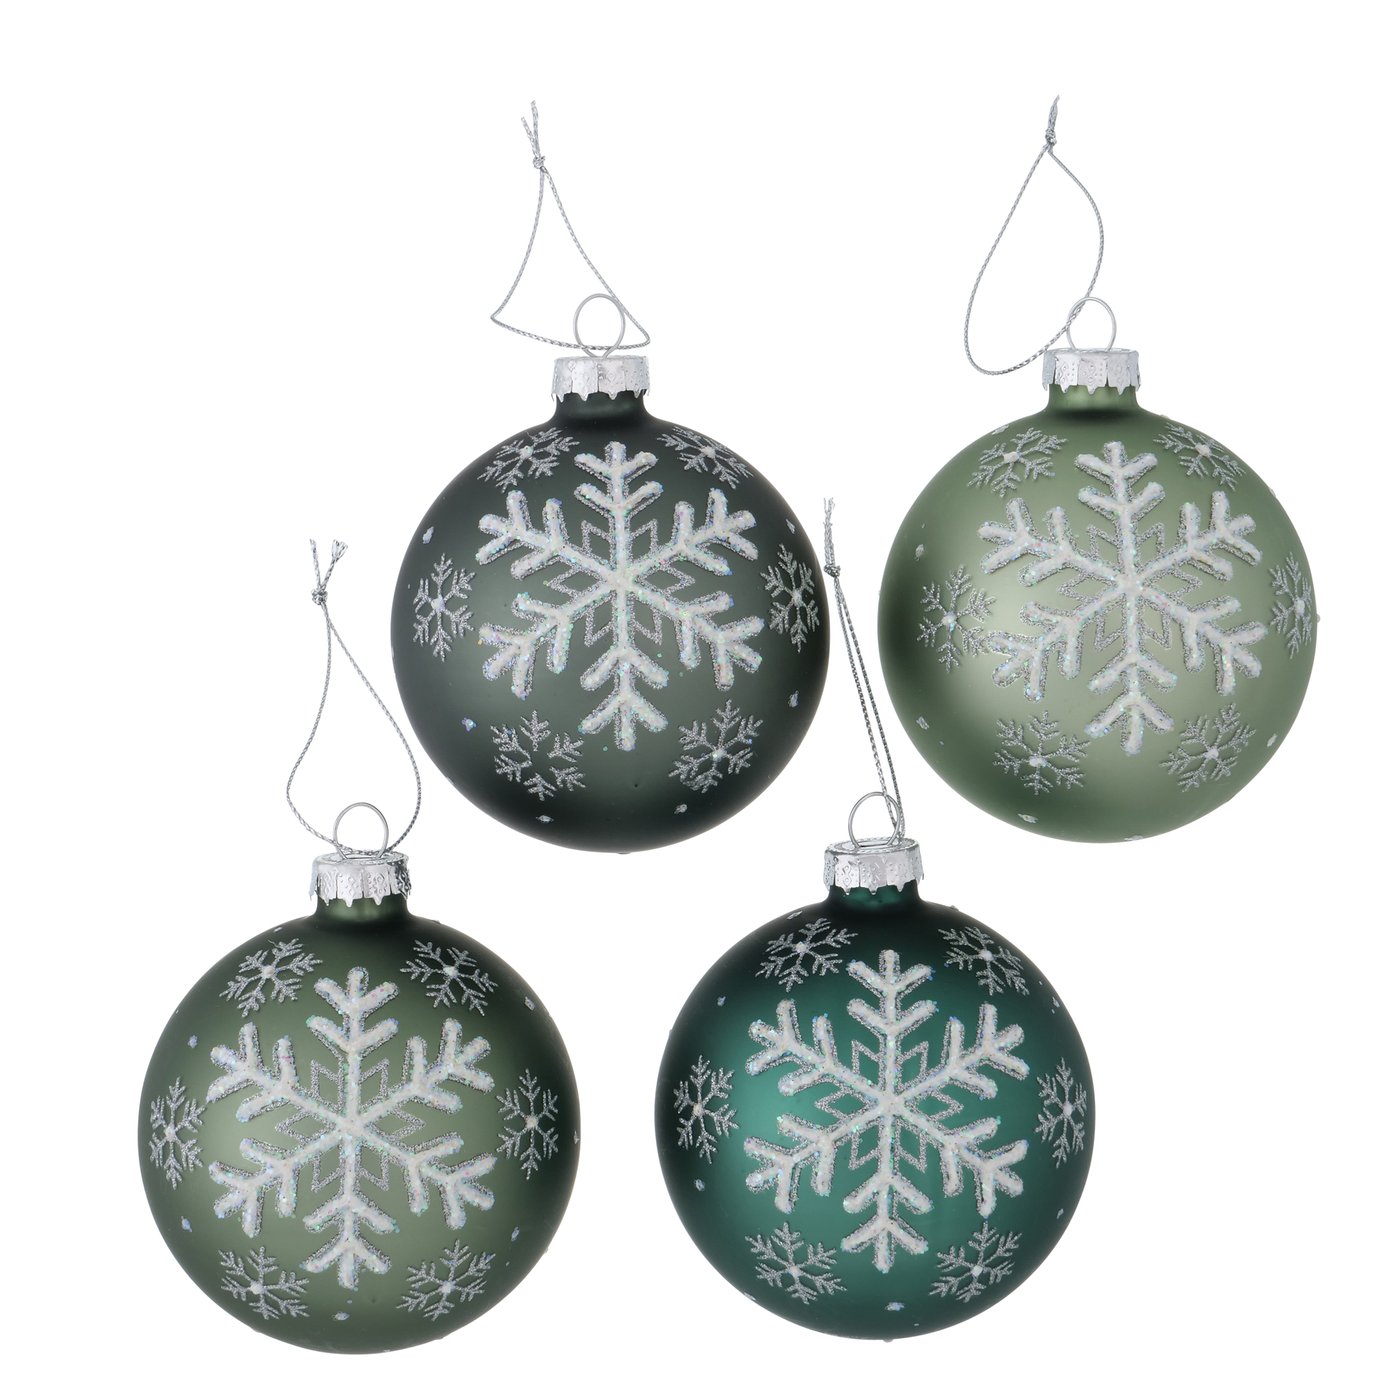 Glas Weihnachtskugel "Schneeflocke" grün, hellgrün salbeigrün 12er Set - D 8cm, 2015693, 4020607943520